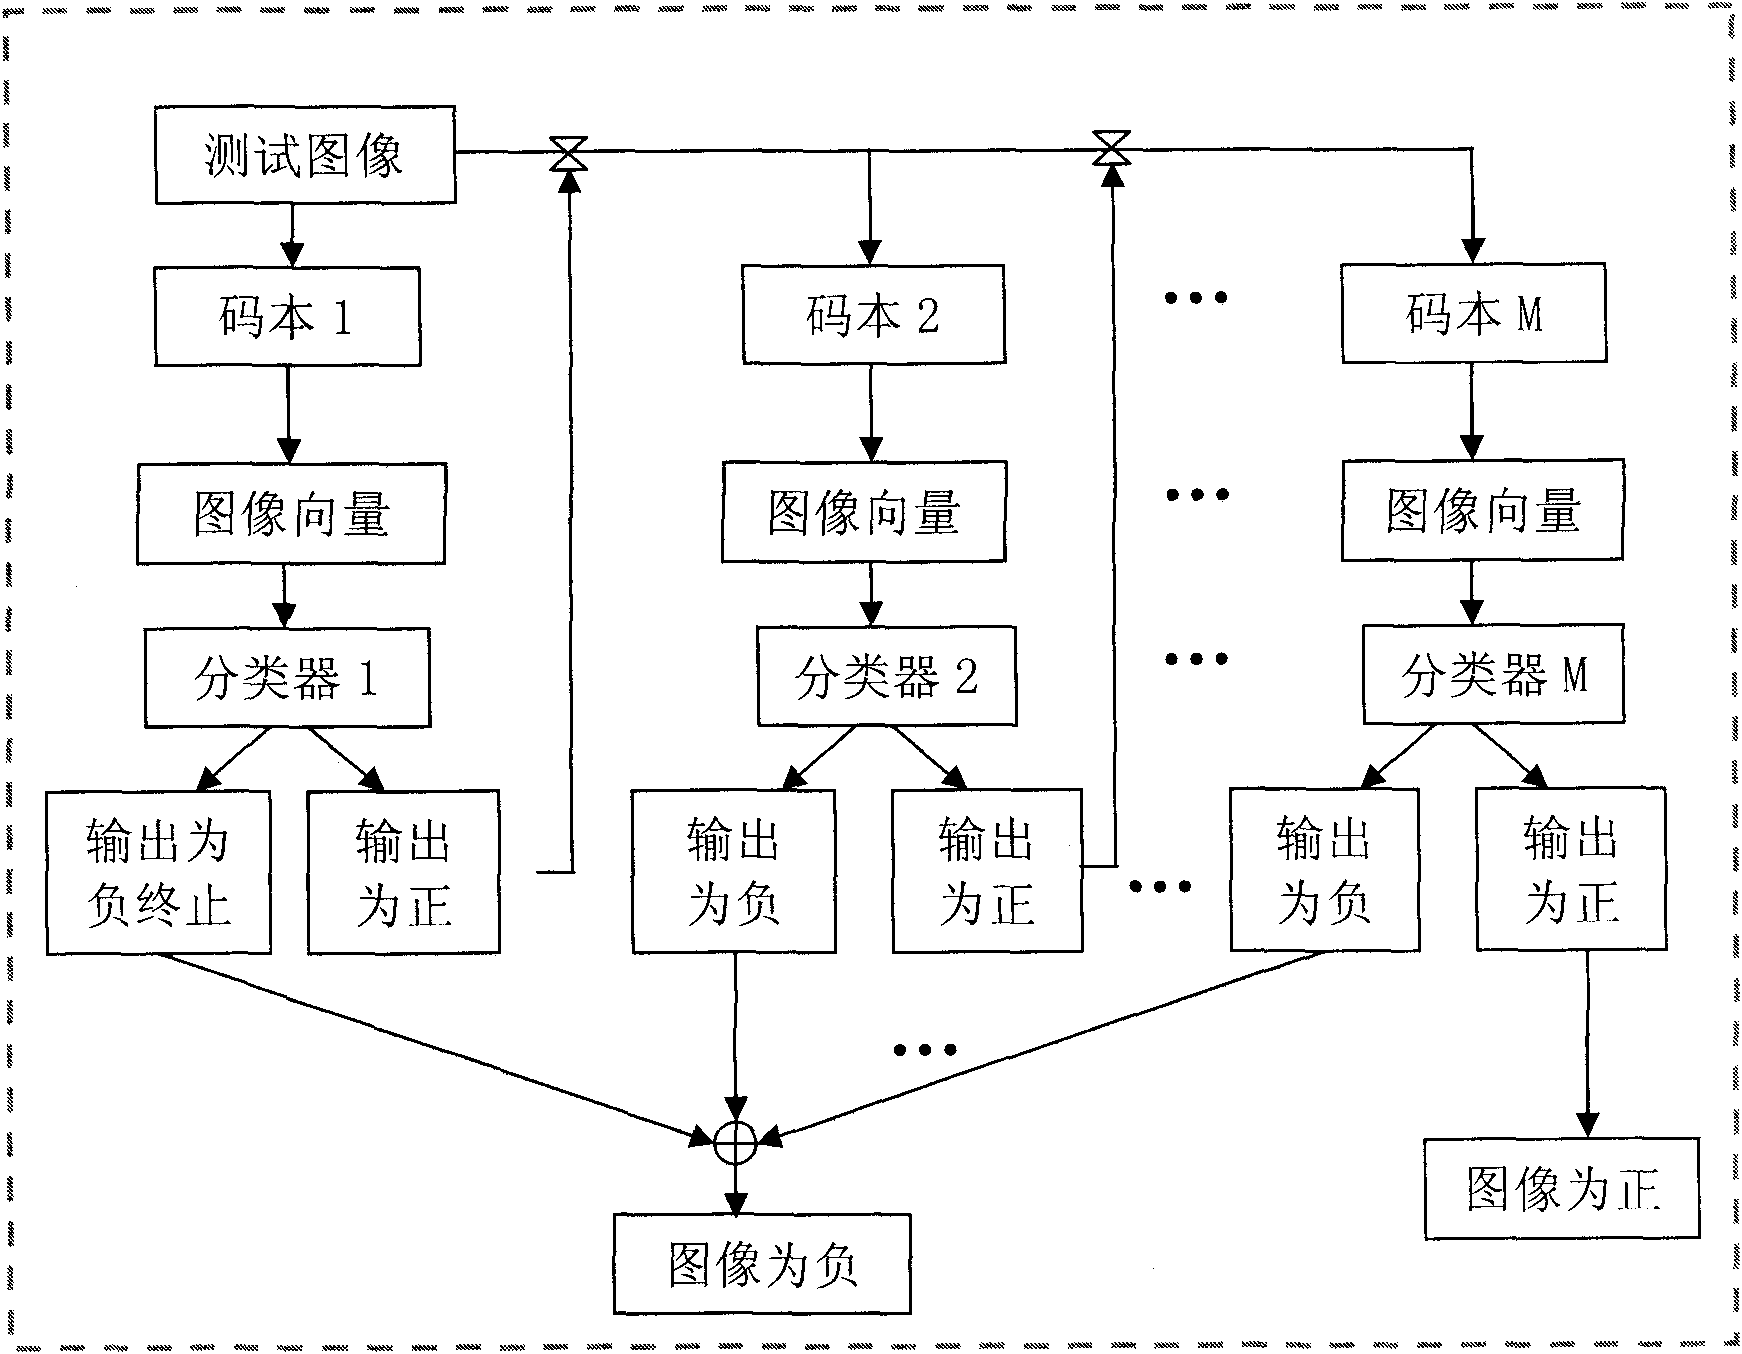 Image classification method based on cascaded codebook generation